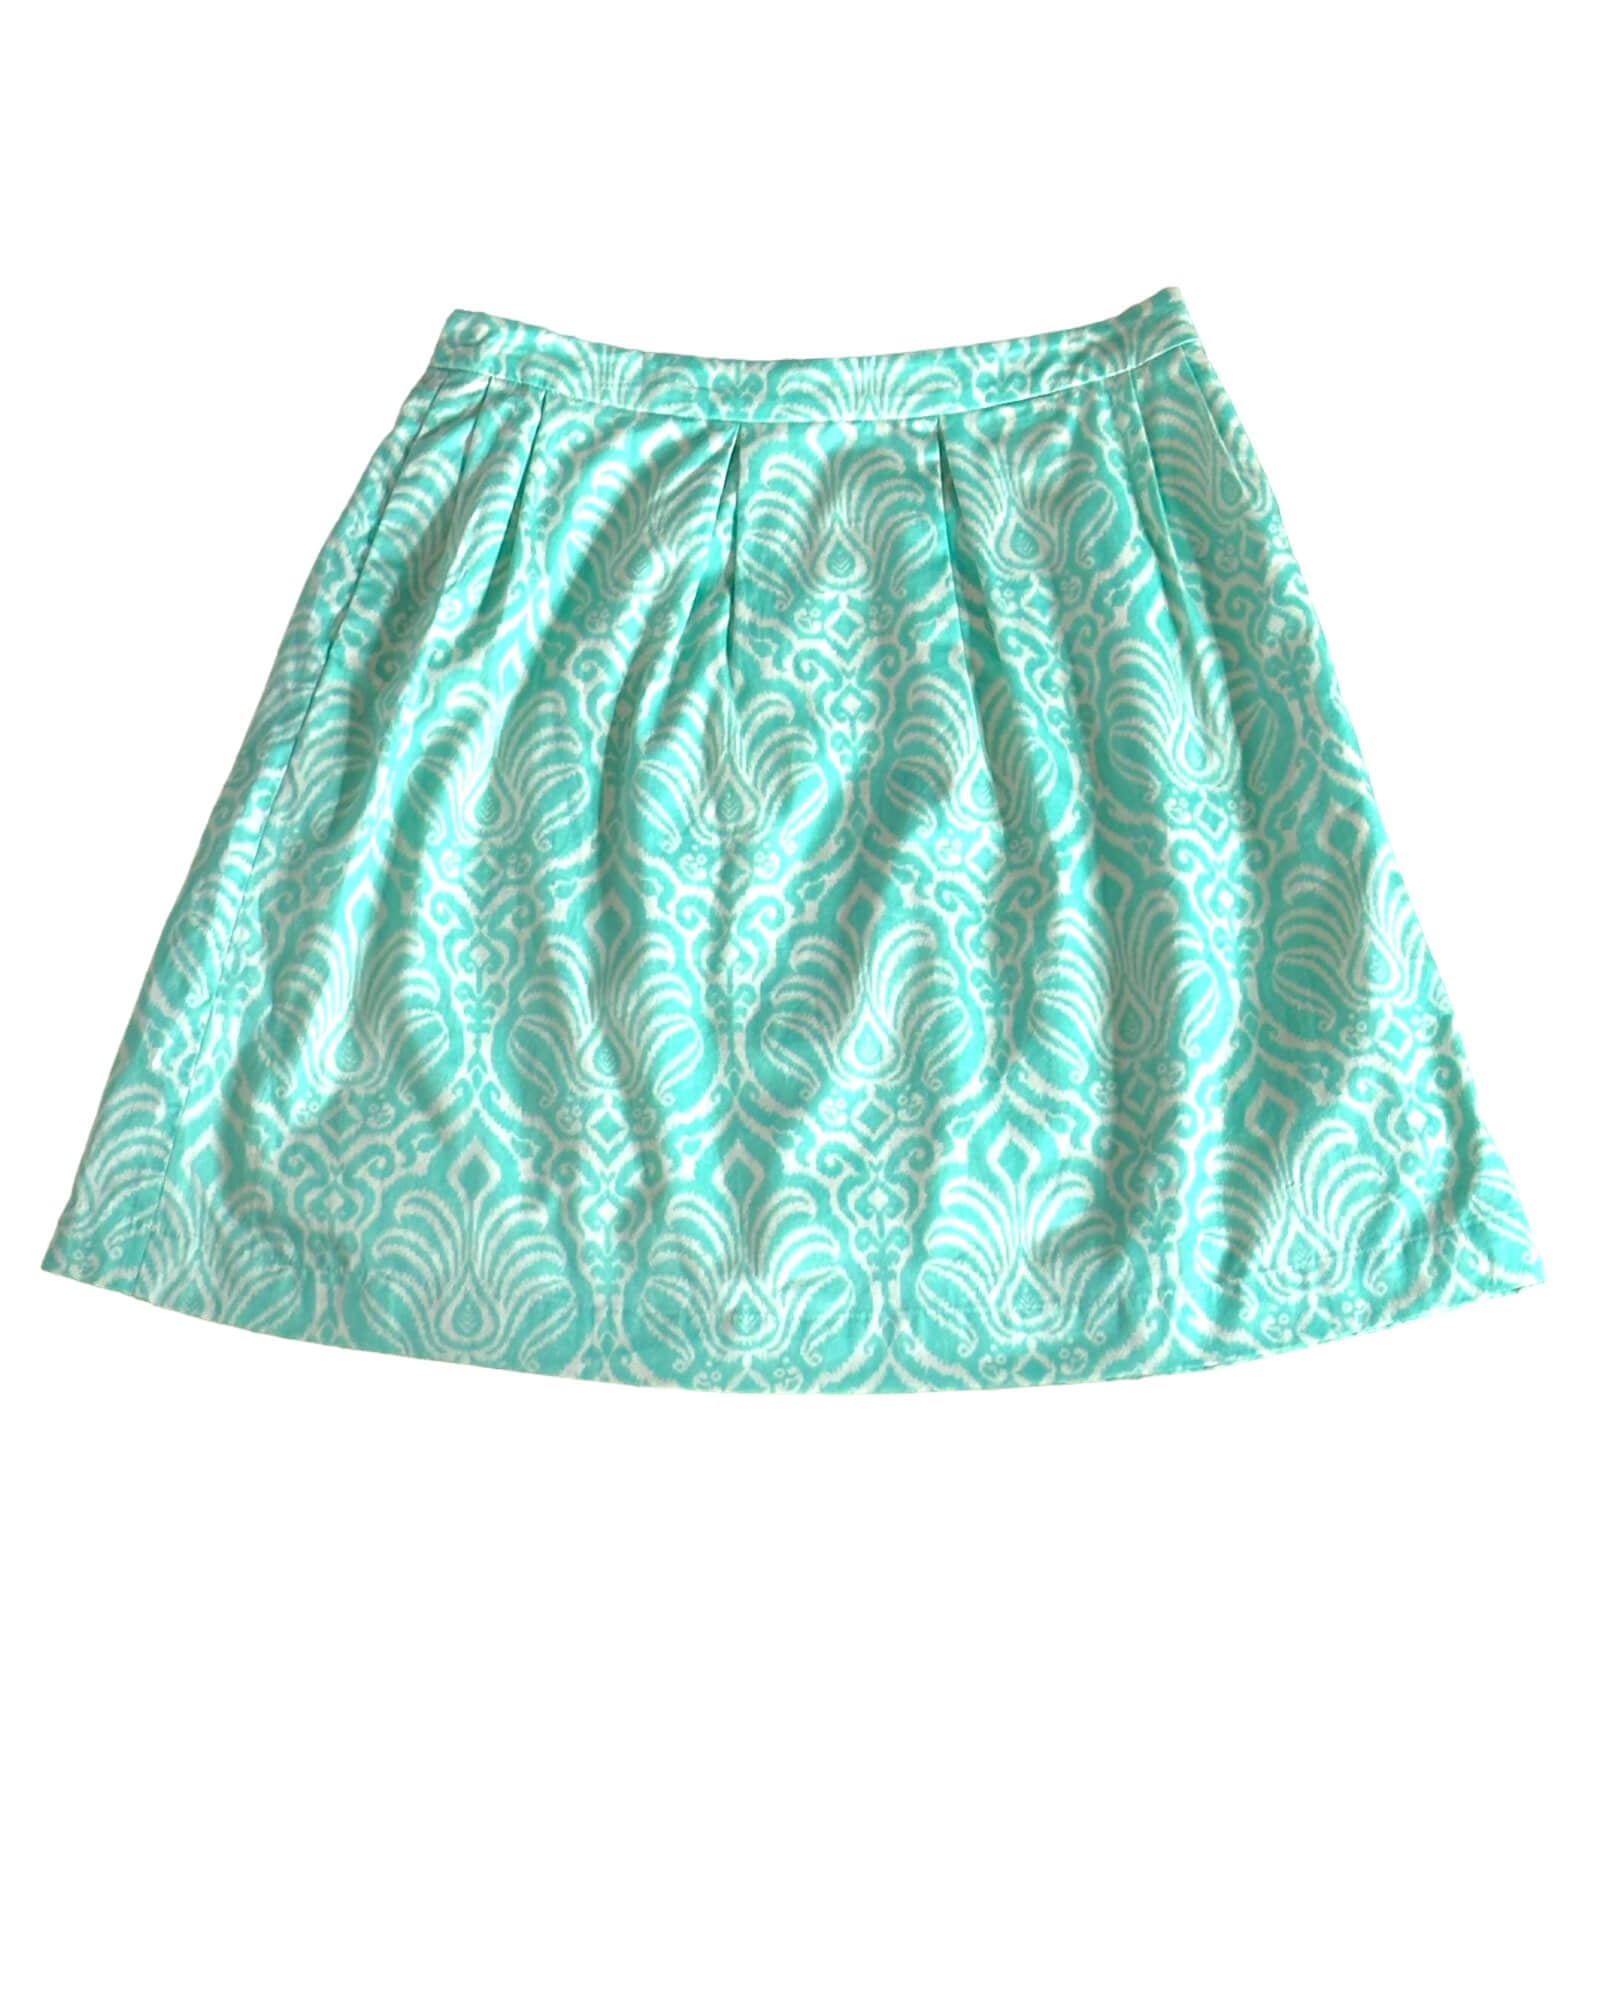 Light Spring GARNET HILL mint green damask print mini skirt